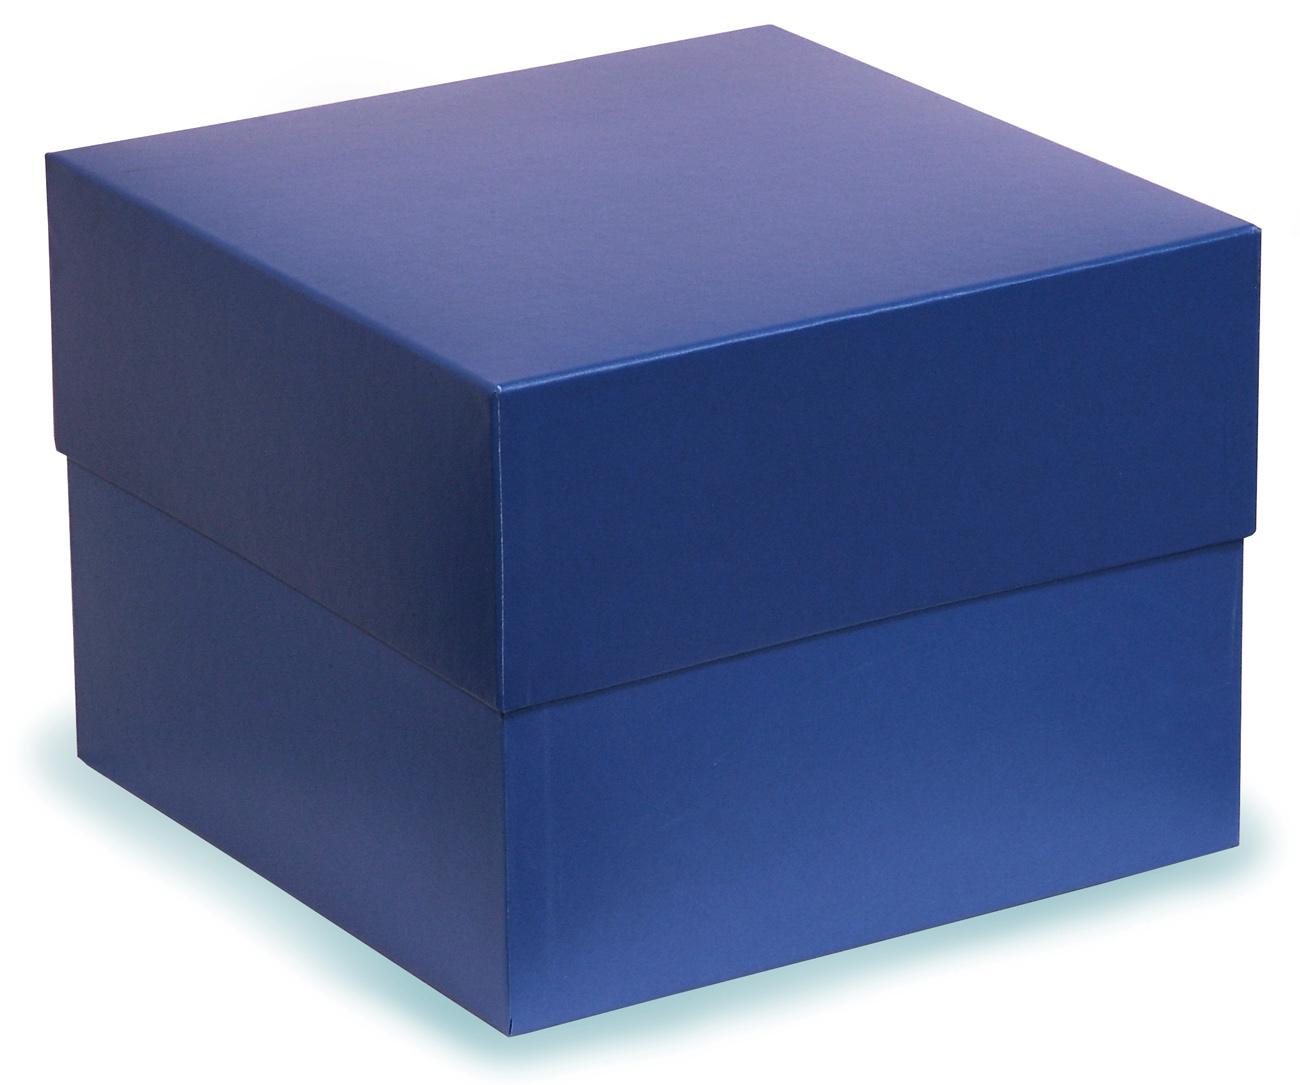 The Blue Box 21